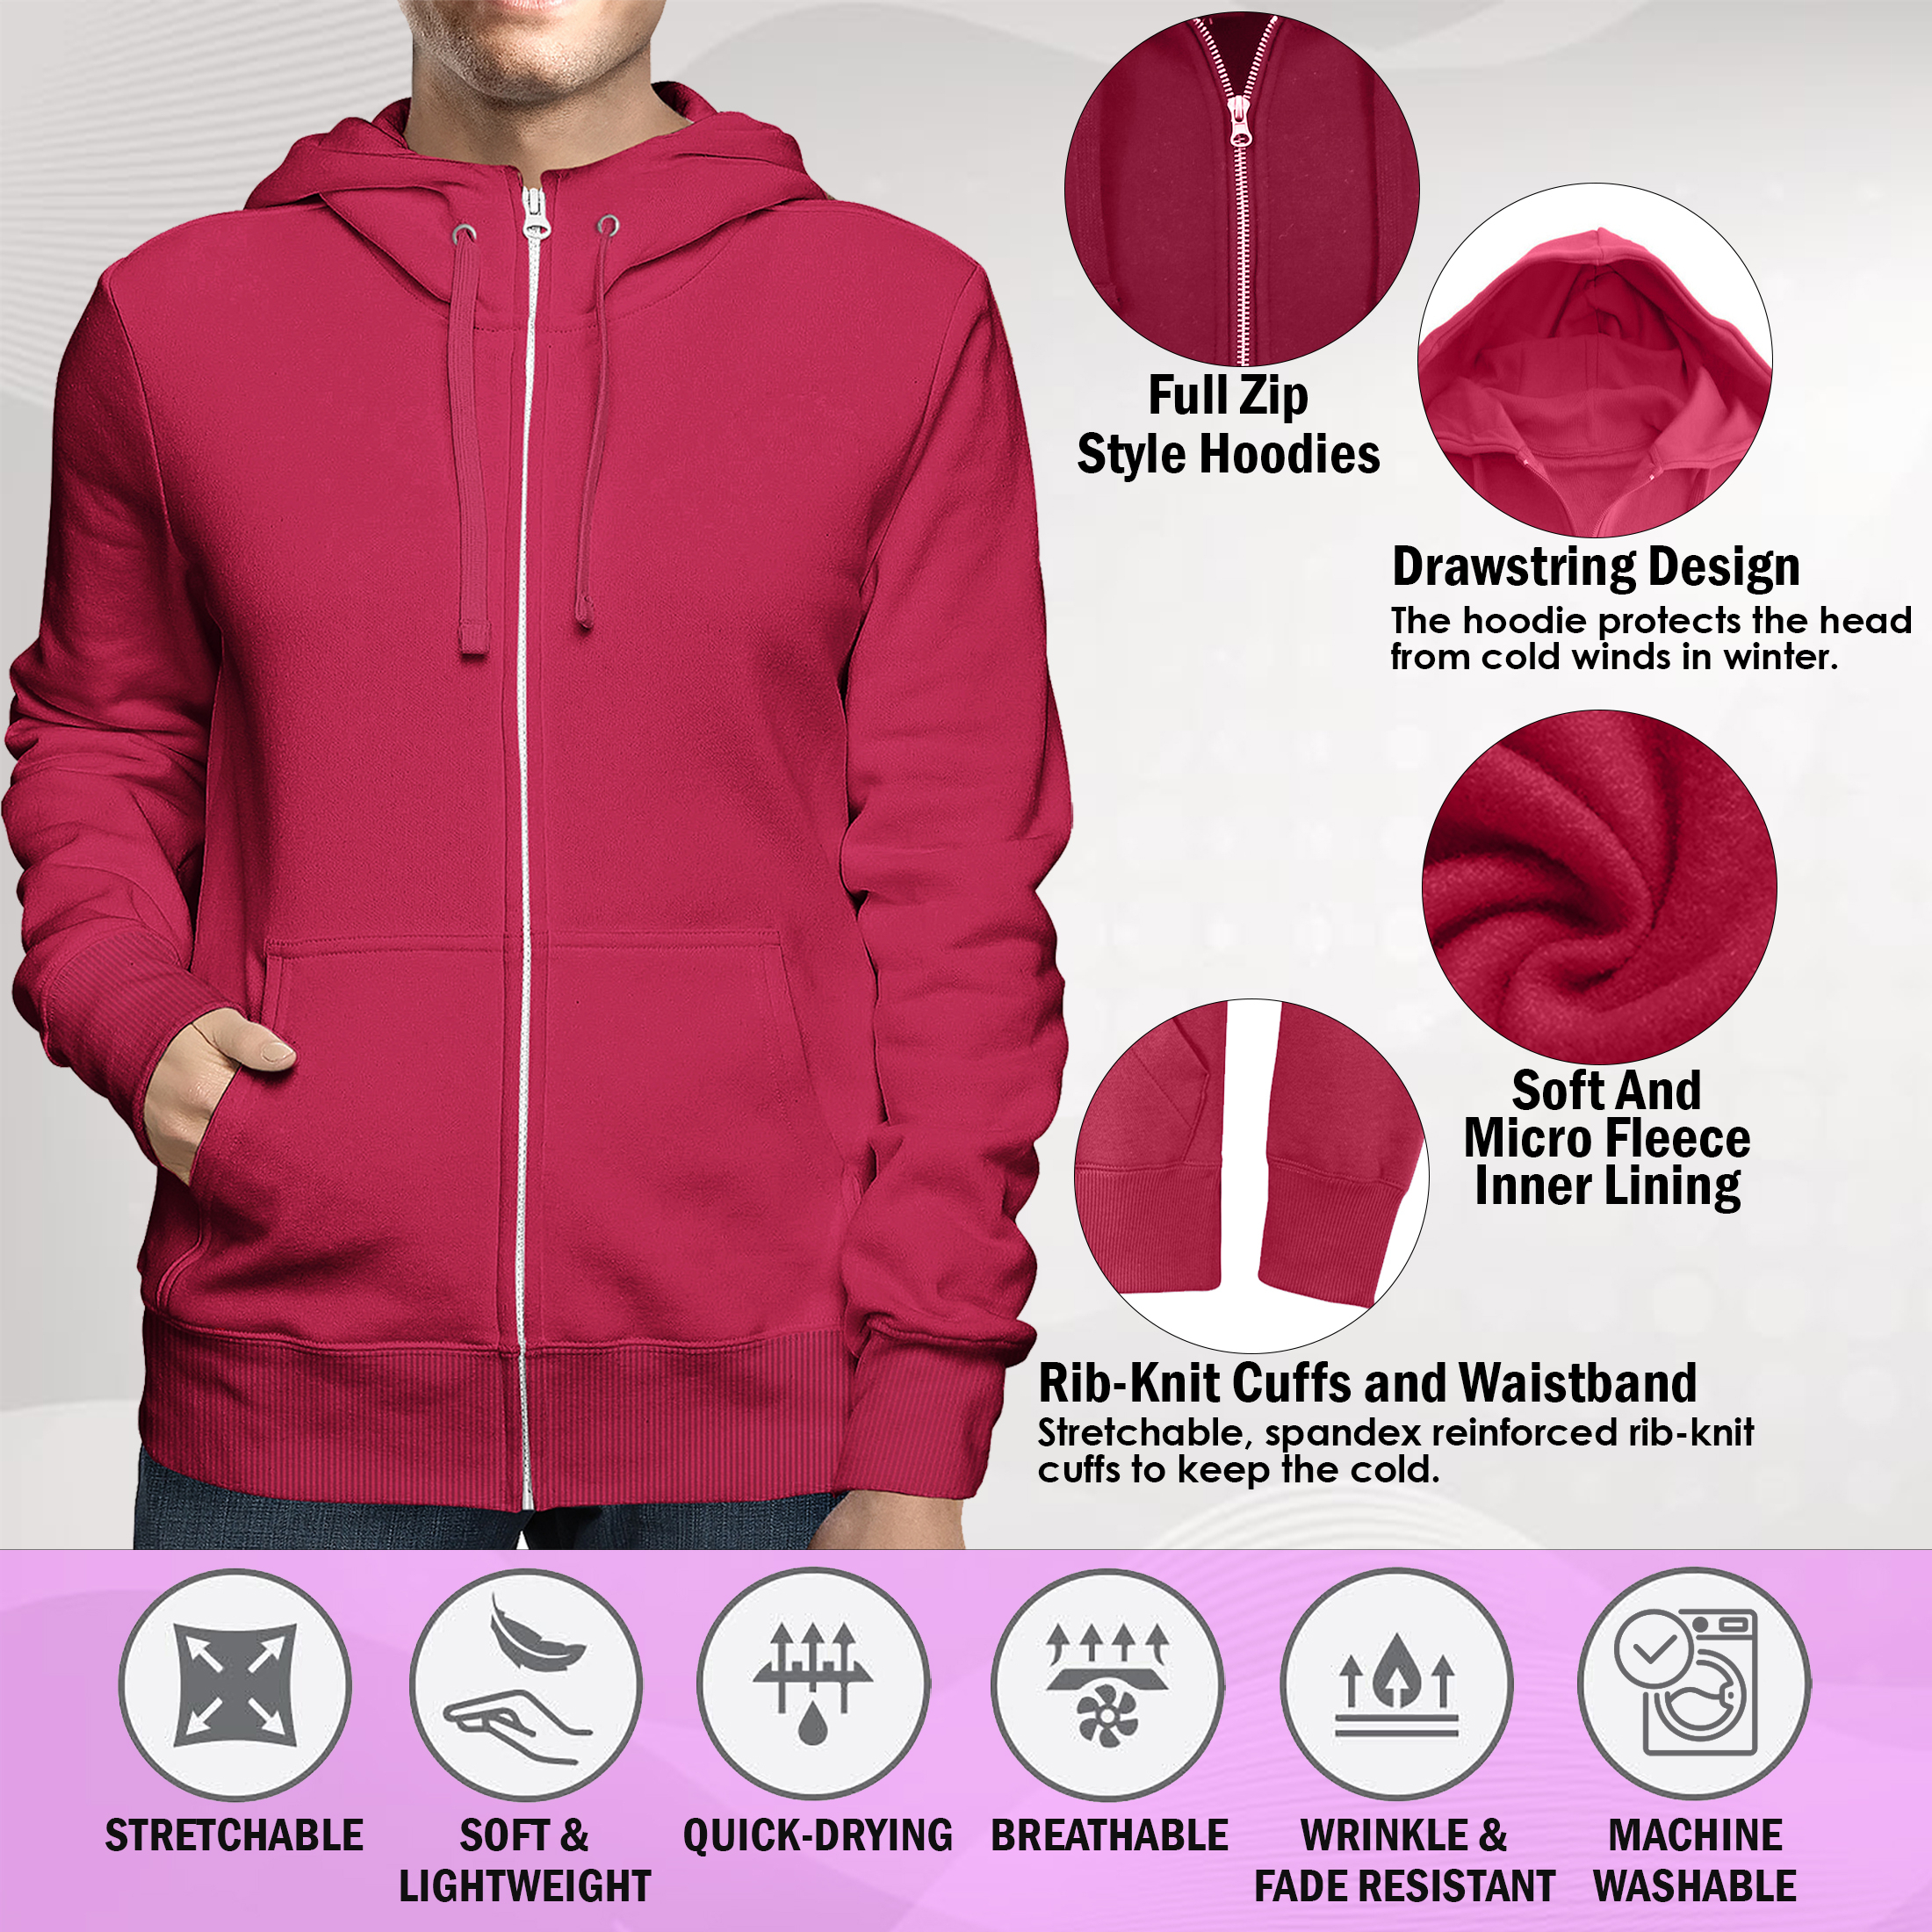 2-Pack: Men's Full Zip Up Fleece-Lined Hoodie Sweatshirt (Big & Tall Size Available) - Charcoal & Burgundy, Medium